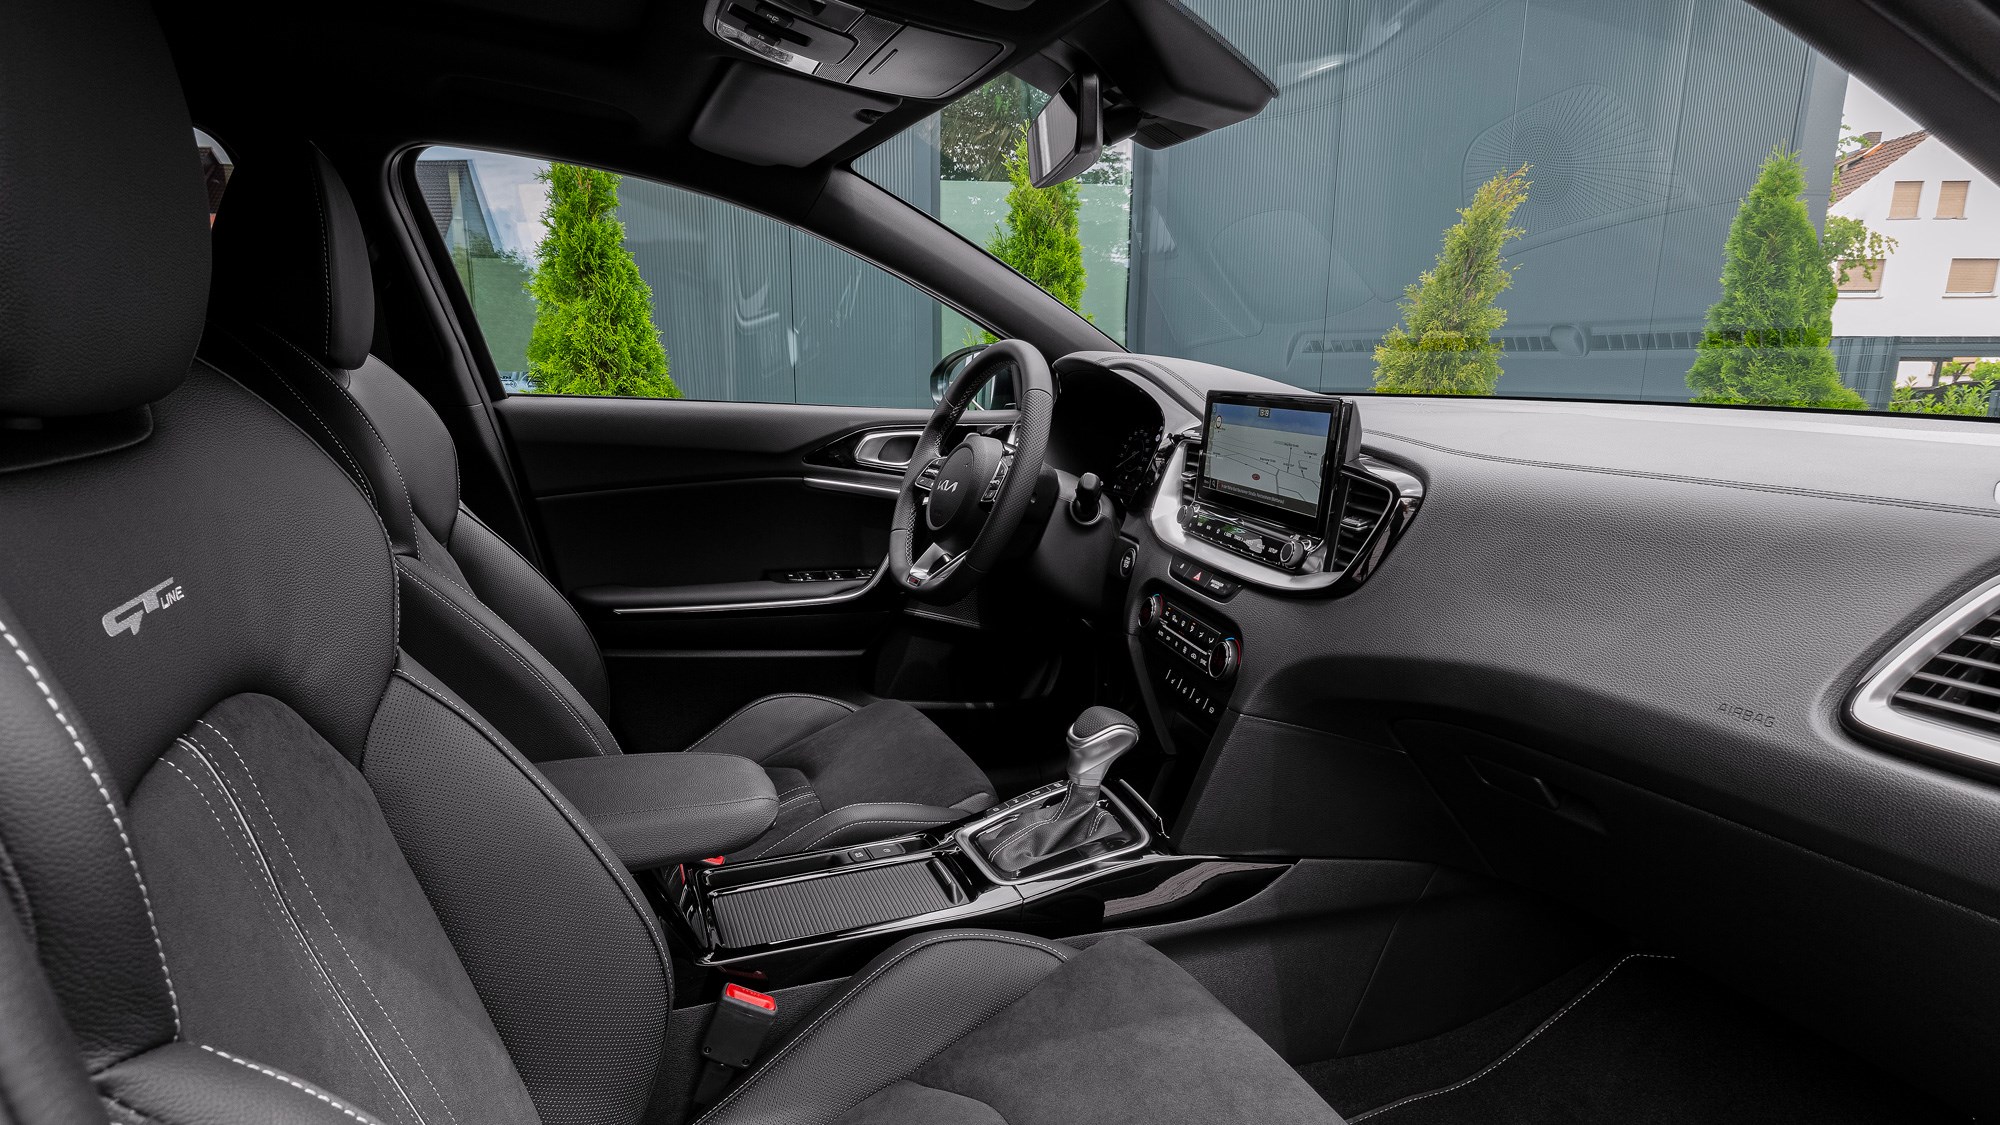 New Kia Ceed review: Old-school ergonomics meets cutting-edge tech